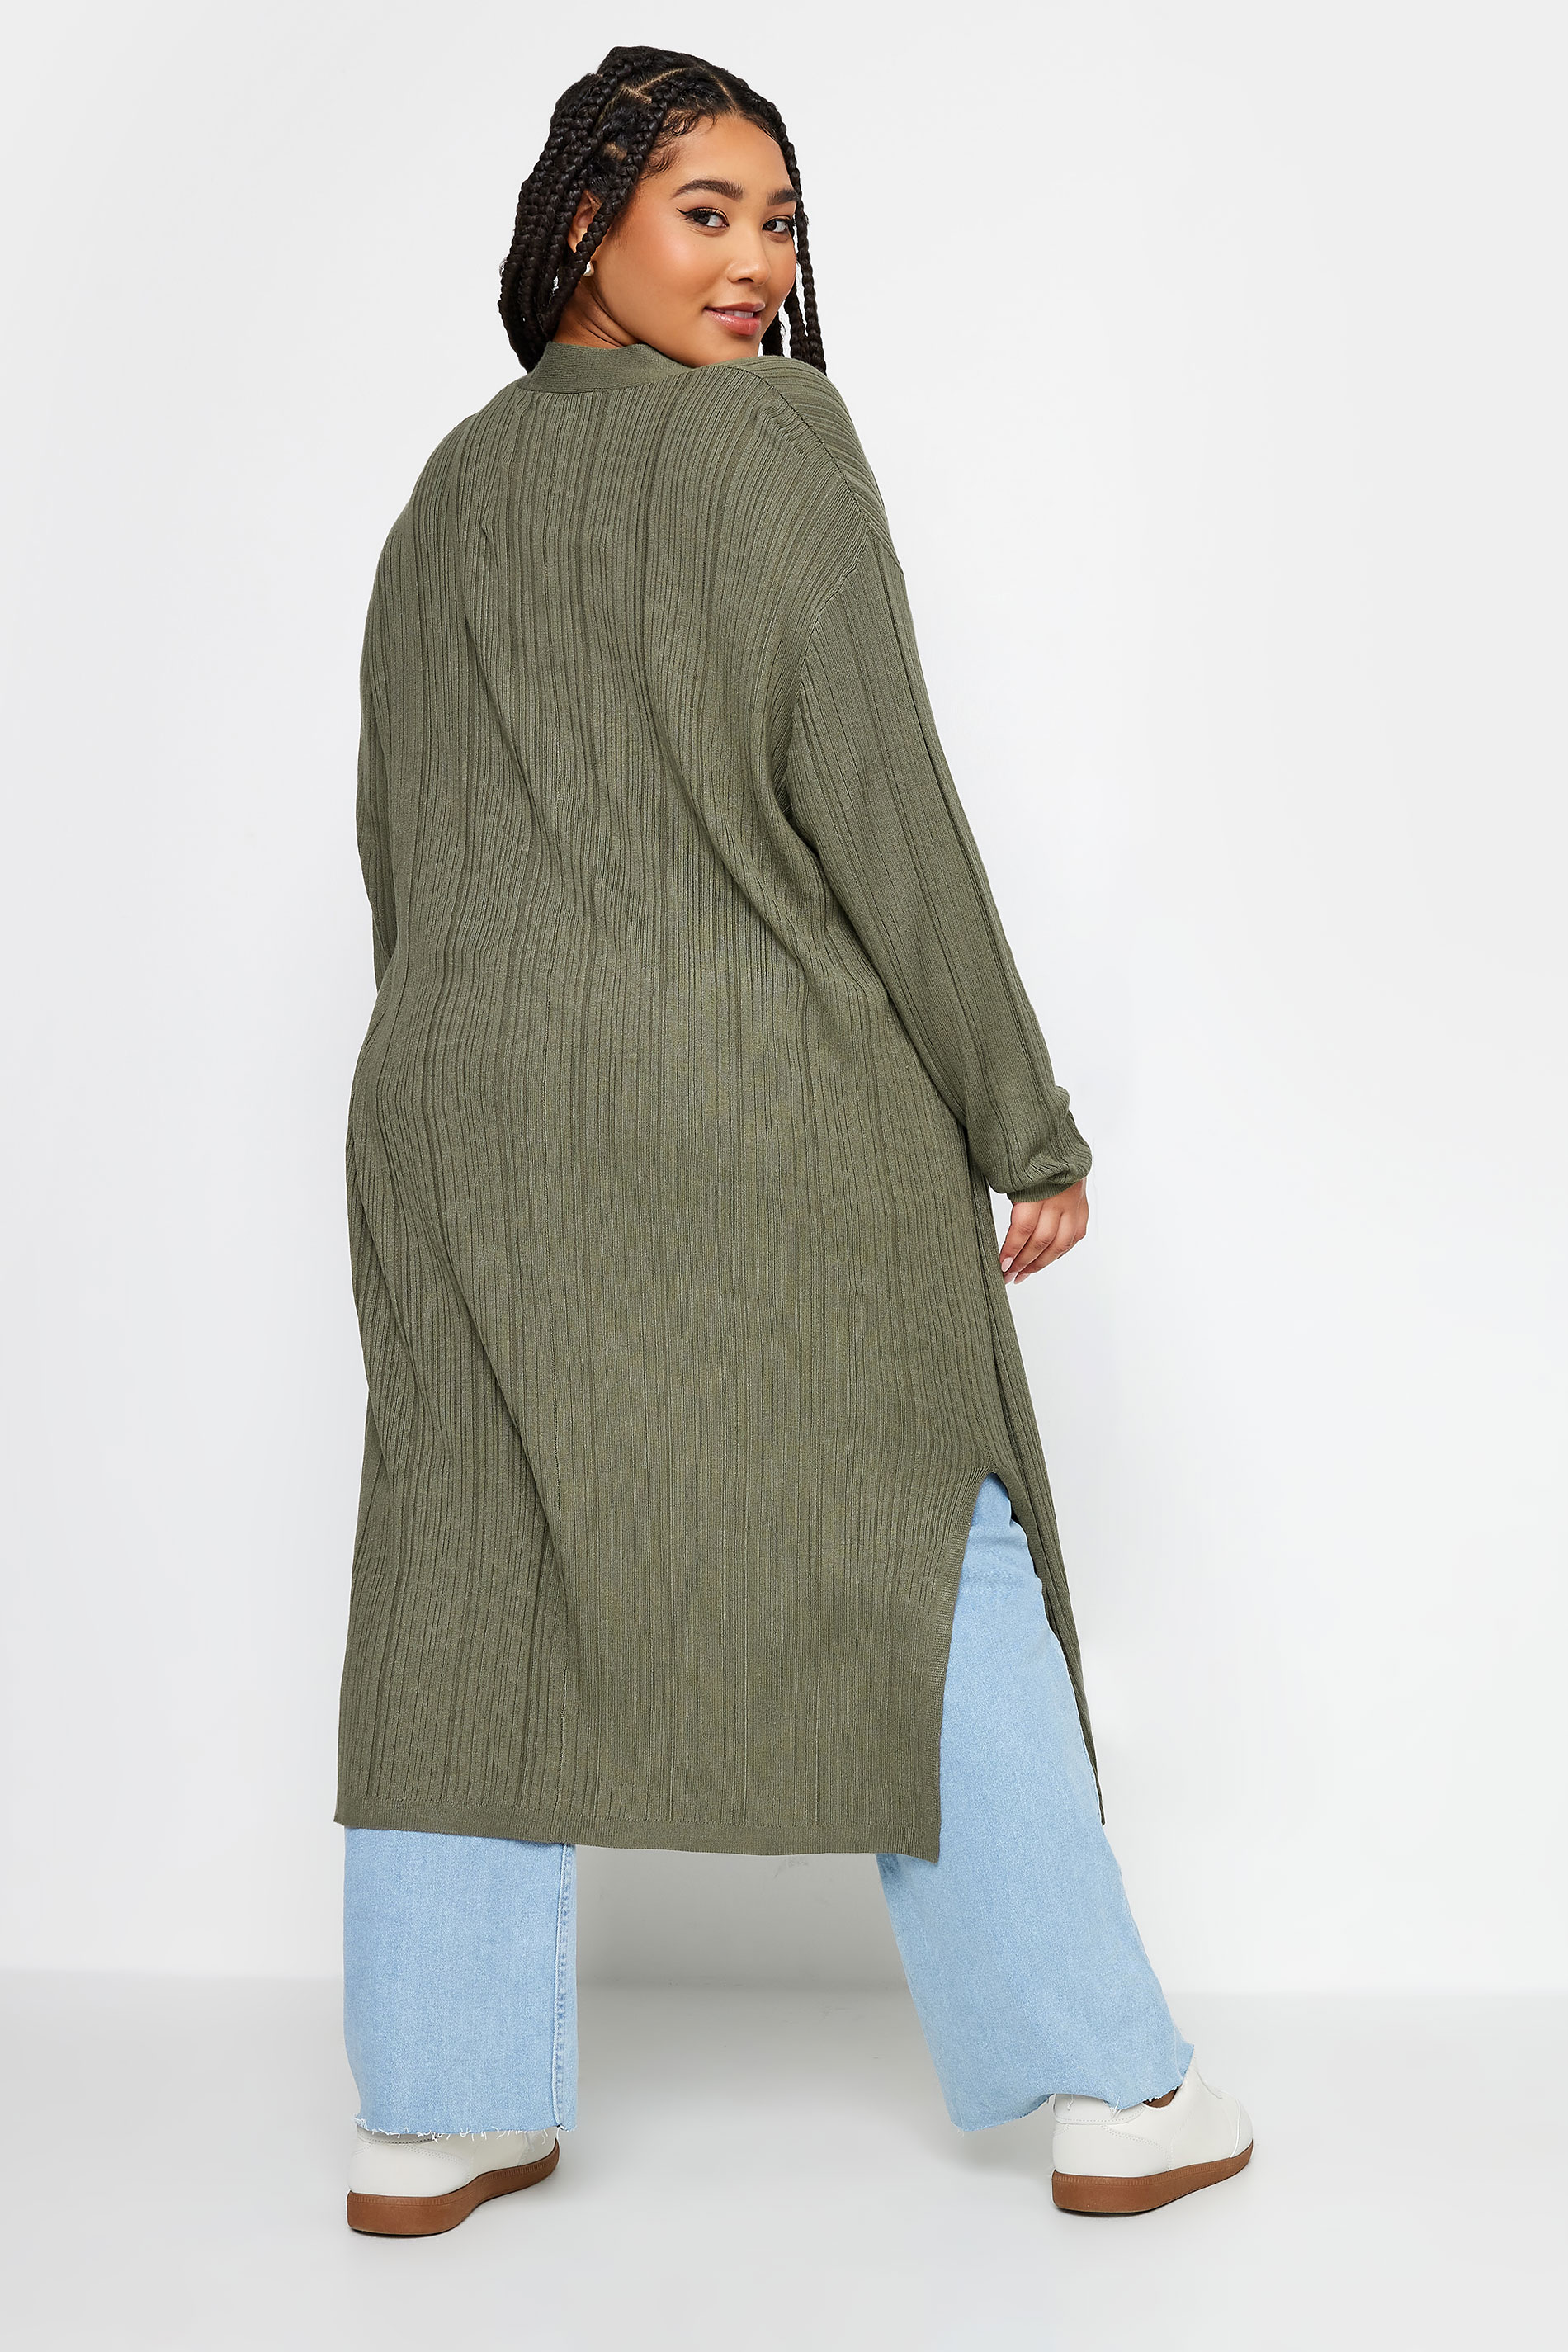 YOURS Plus Size Khaki Green Longline Ribbed Cardigan | Yours Clothing 3